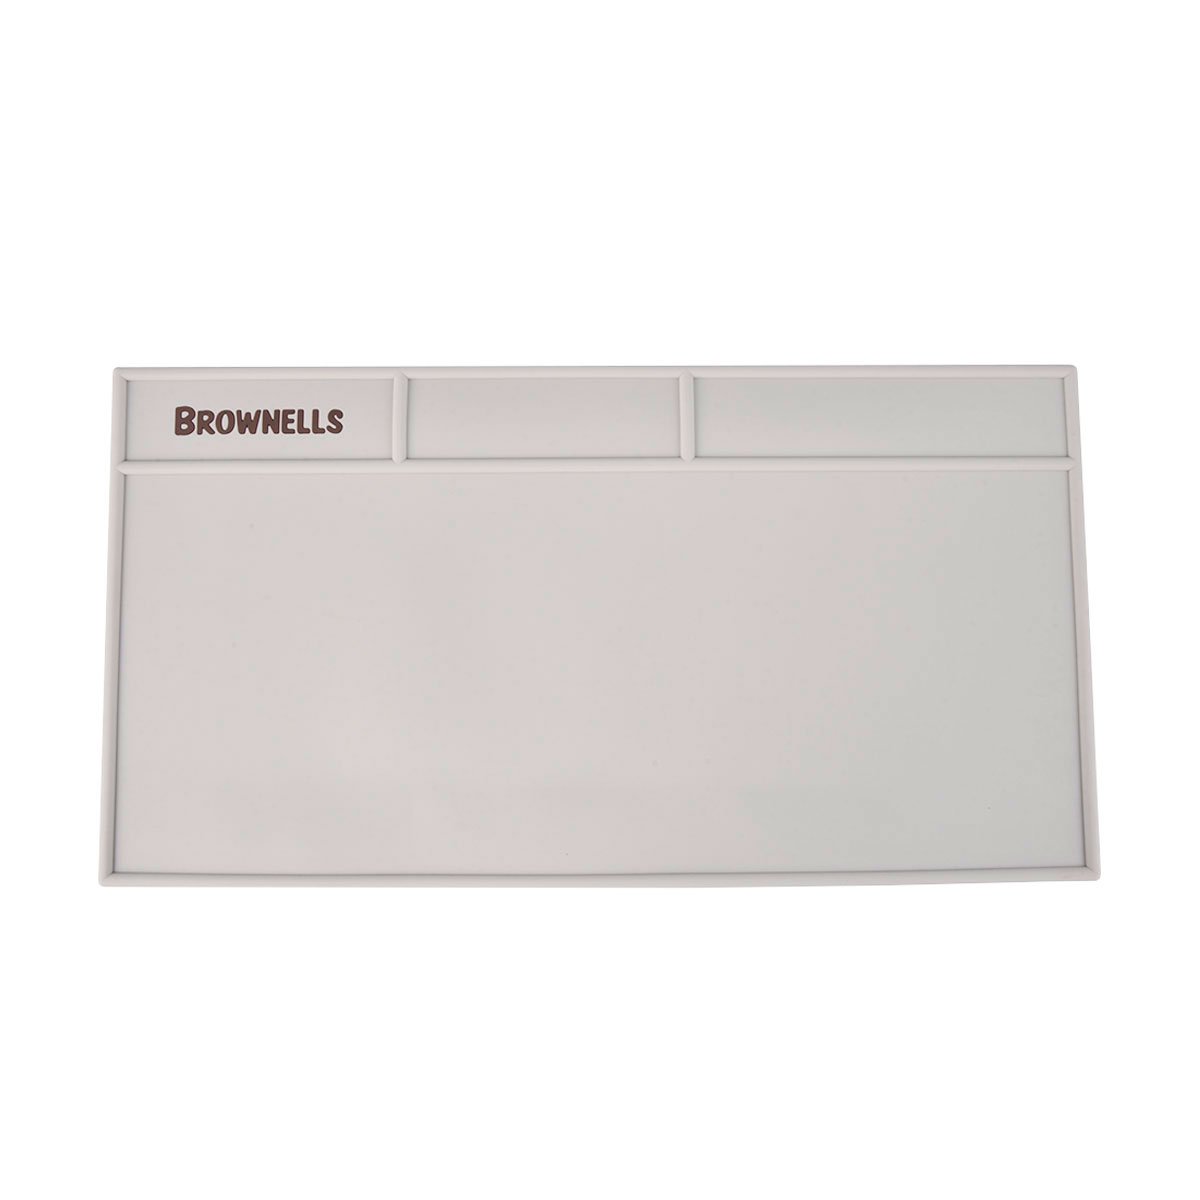 BROWNELLS - WORKMAN PVC MAT